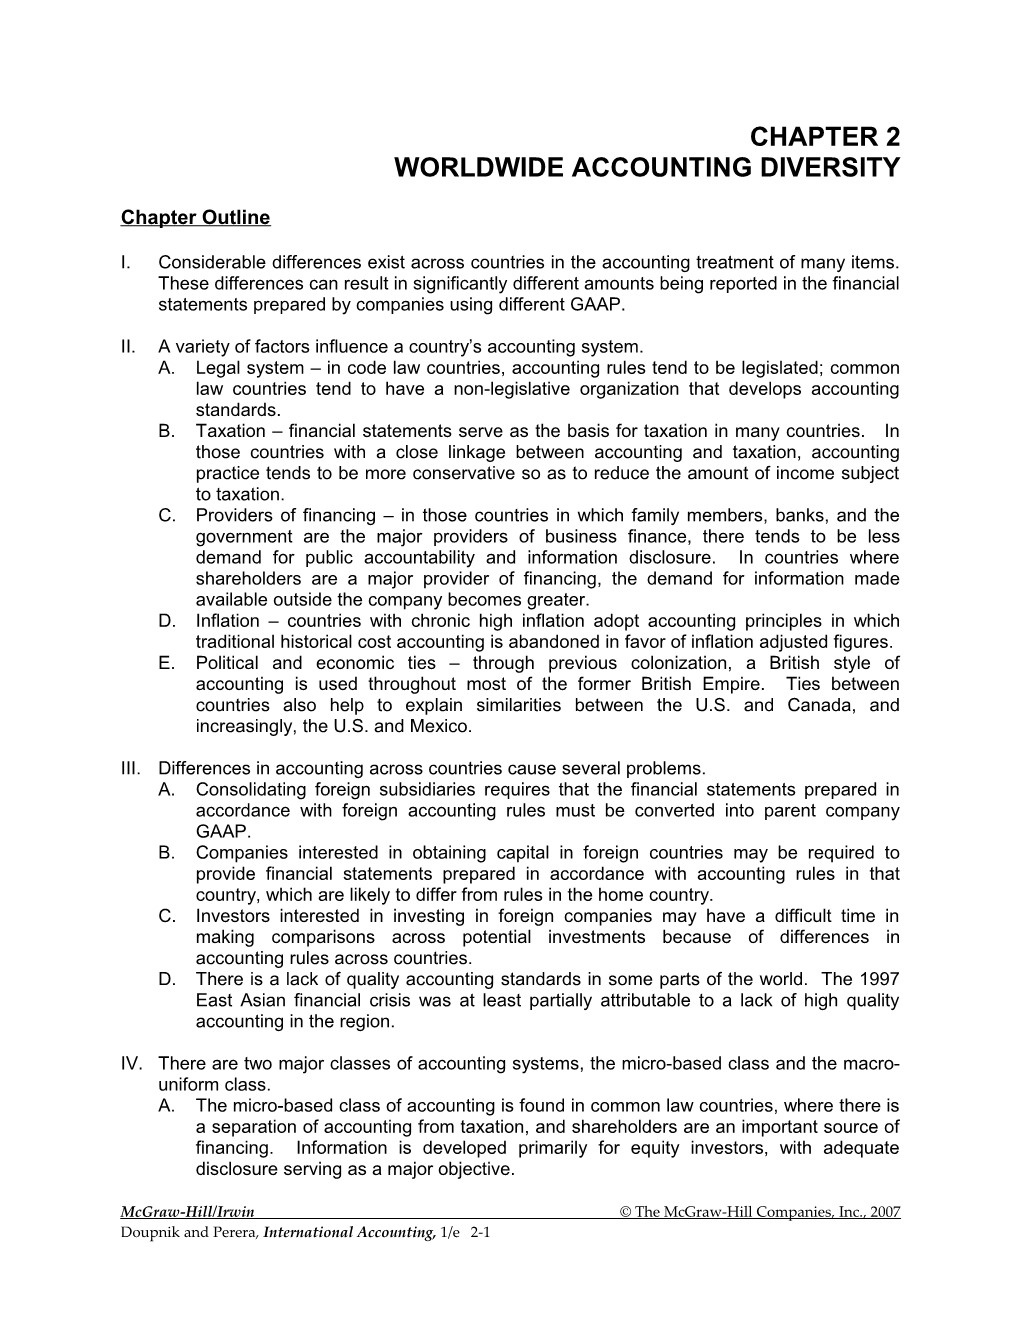 Worldwide Accounting Diversity